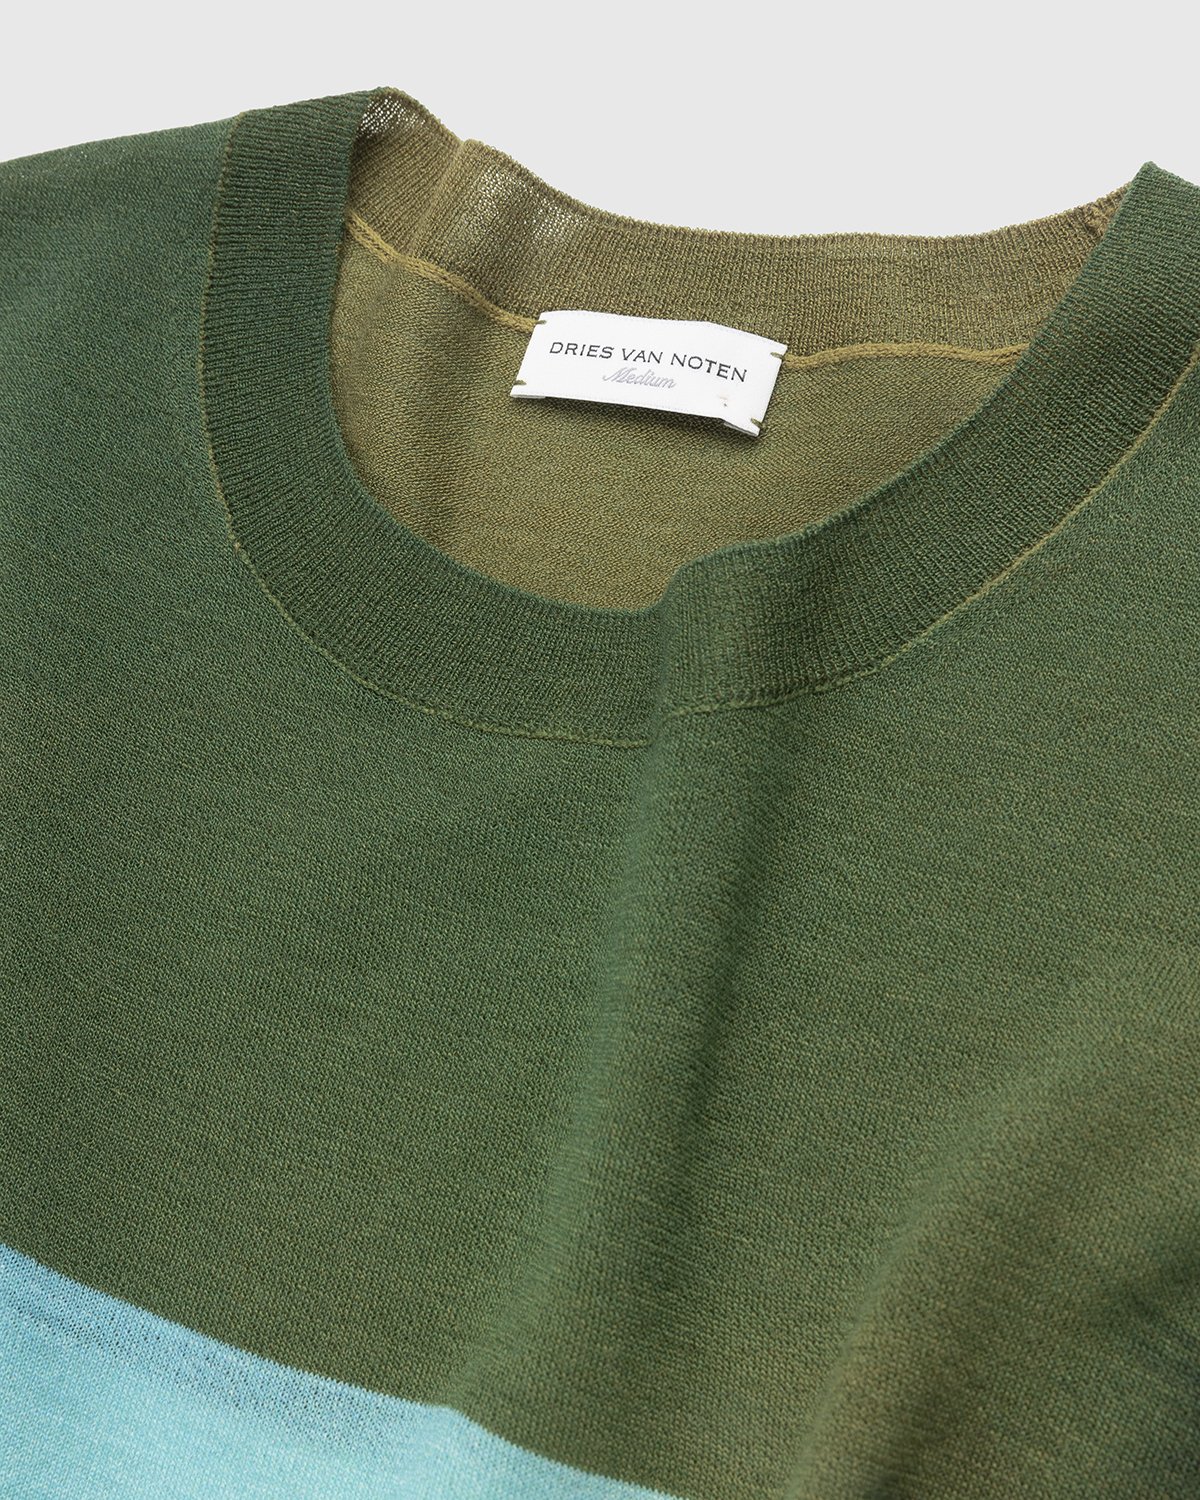 Dries van Noten - Jendrik Merino Sweater Dessin - Clothing - Multi - Image 3